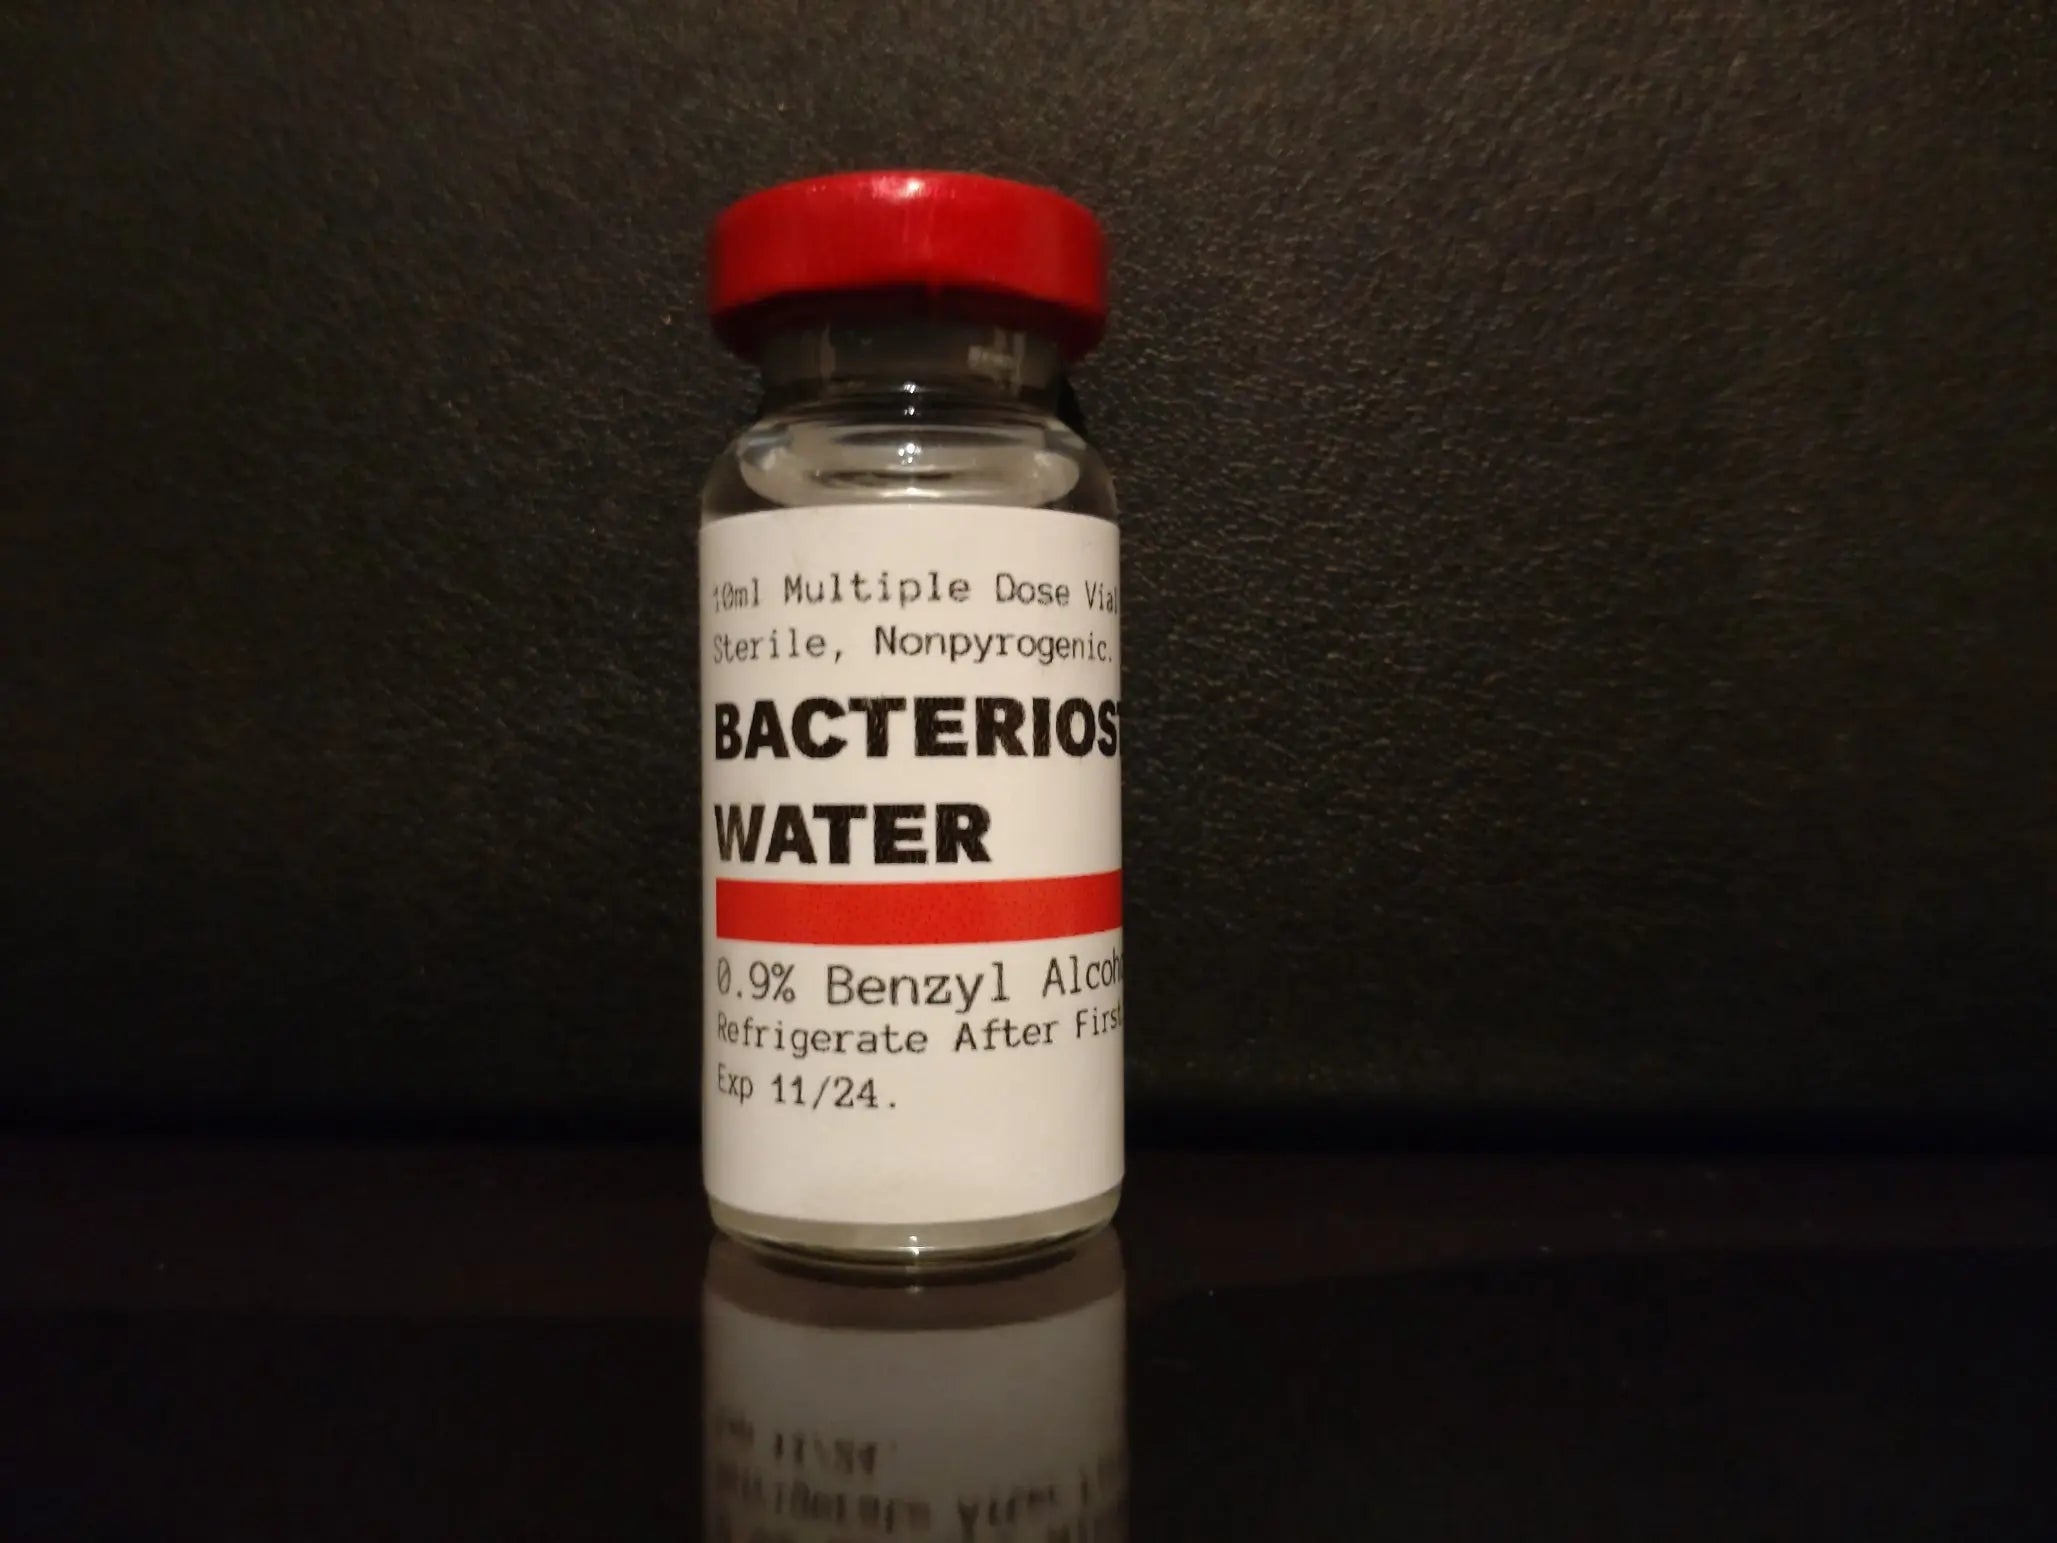 www.bacteriostatic-water-uk.com